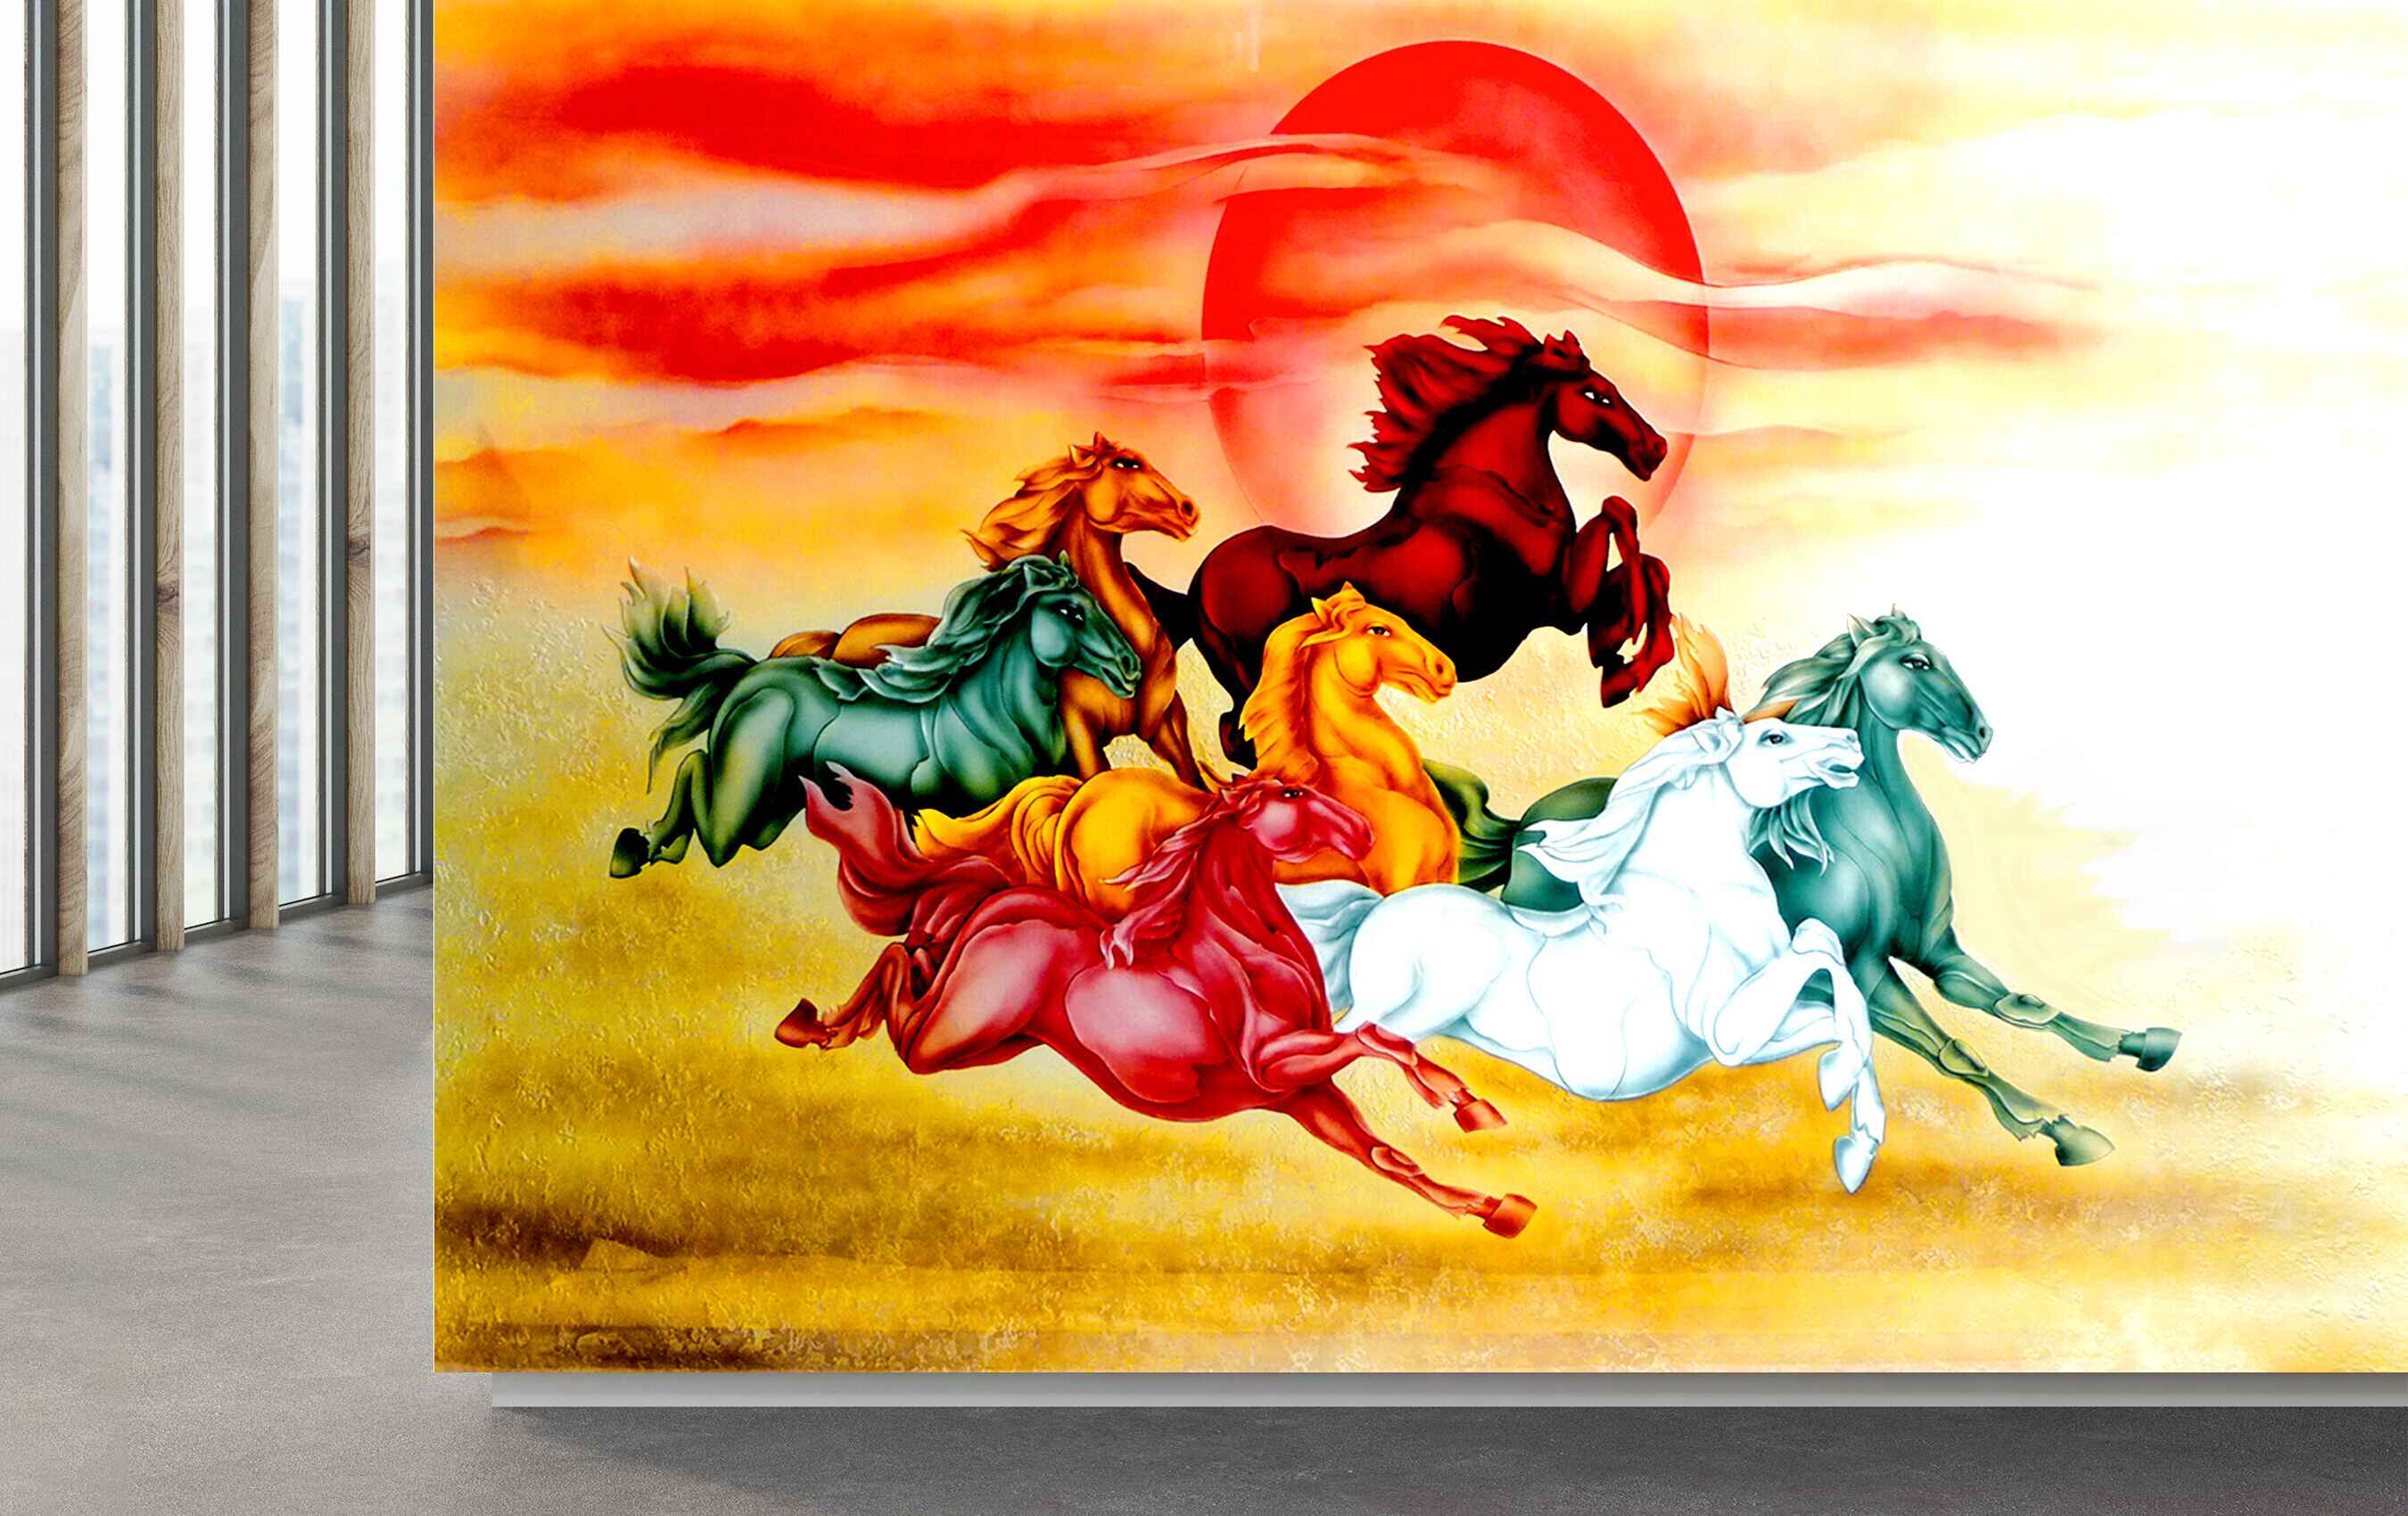 Avikalp MWZ3769 Seven 7 Horses Sun Racing HD Wallpaper